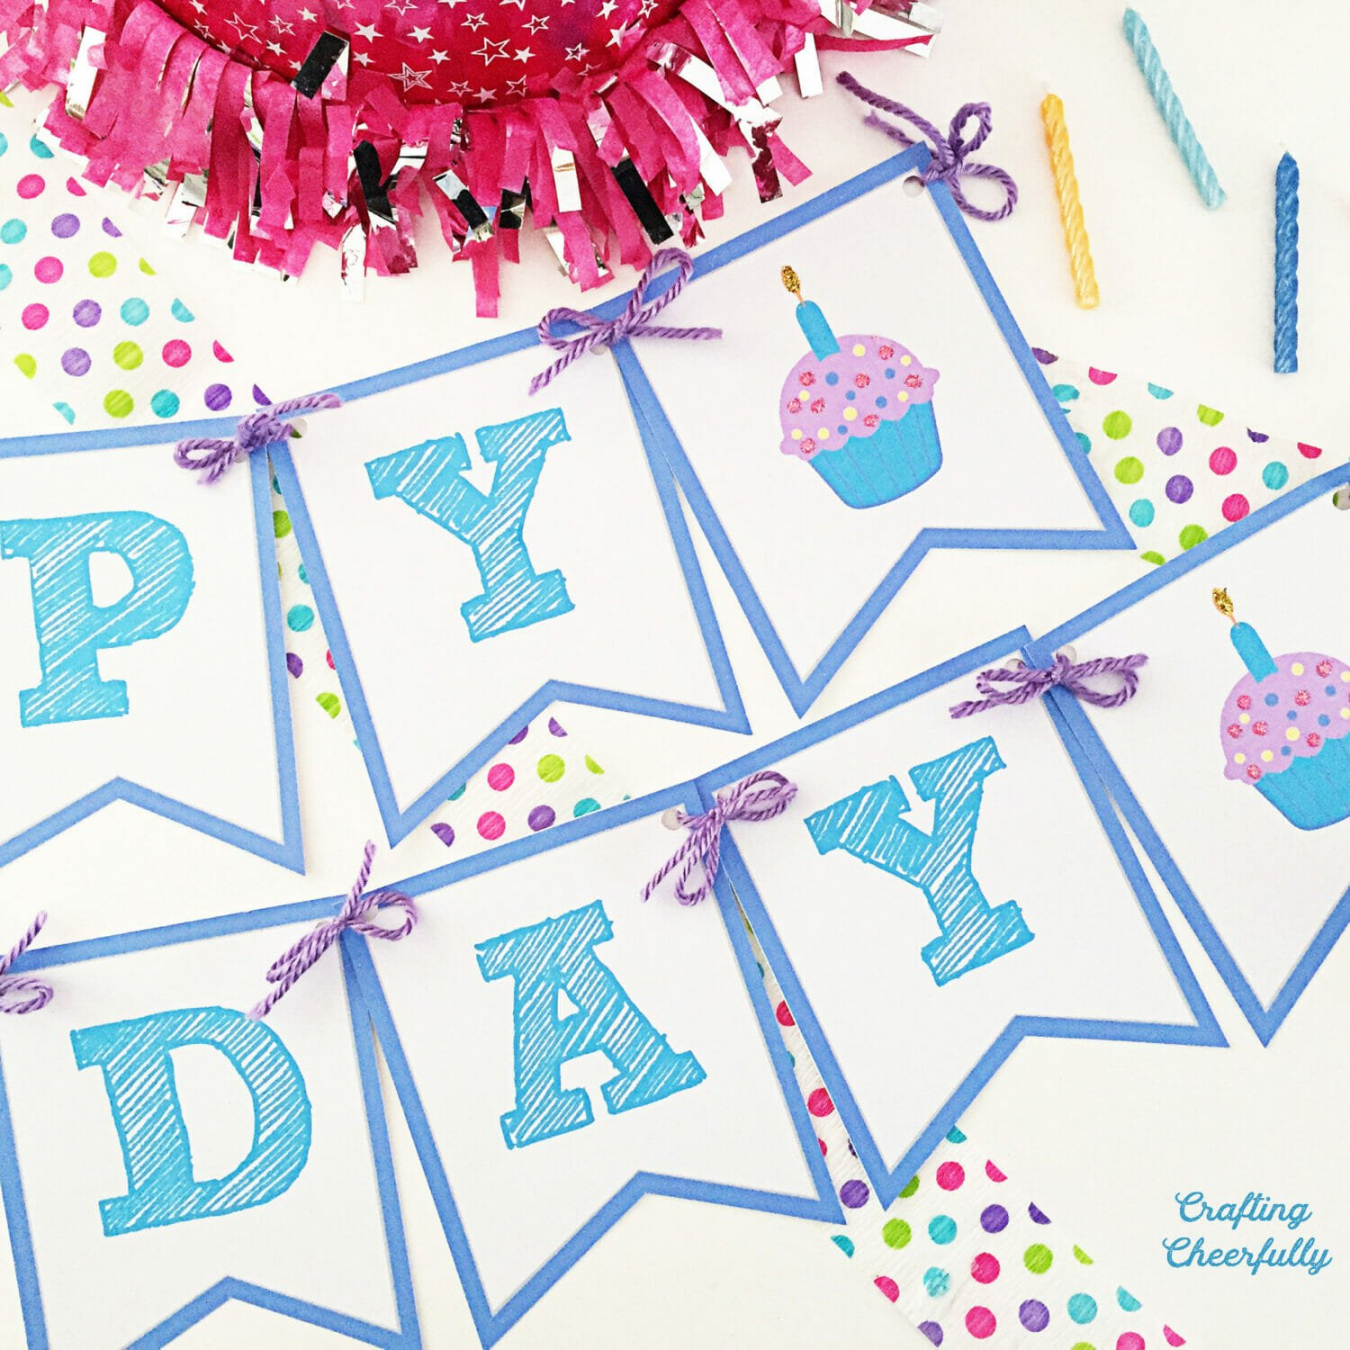 Free Printable Happy Birthday Banner! - Crafting Cheerfully - FREE Printables - Free Printable Birthday Banner